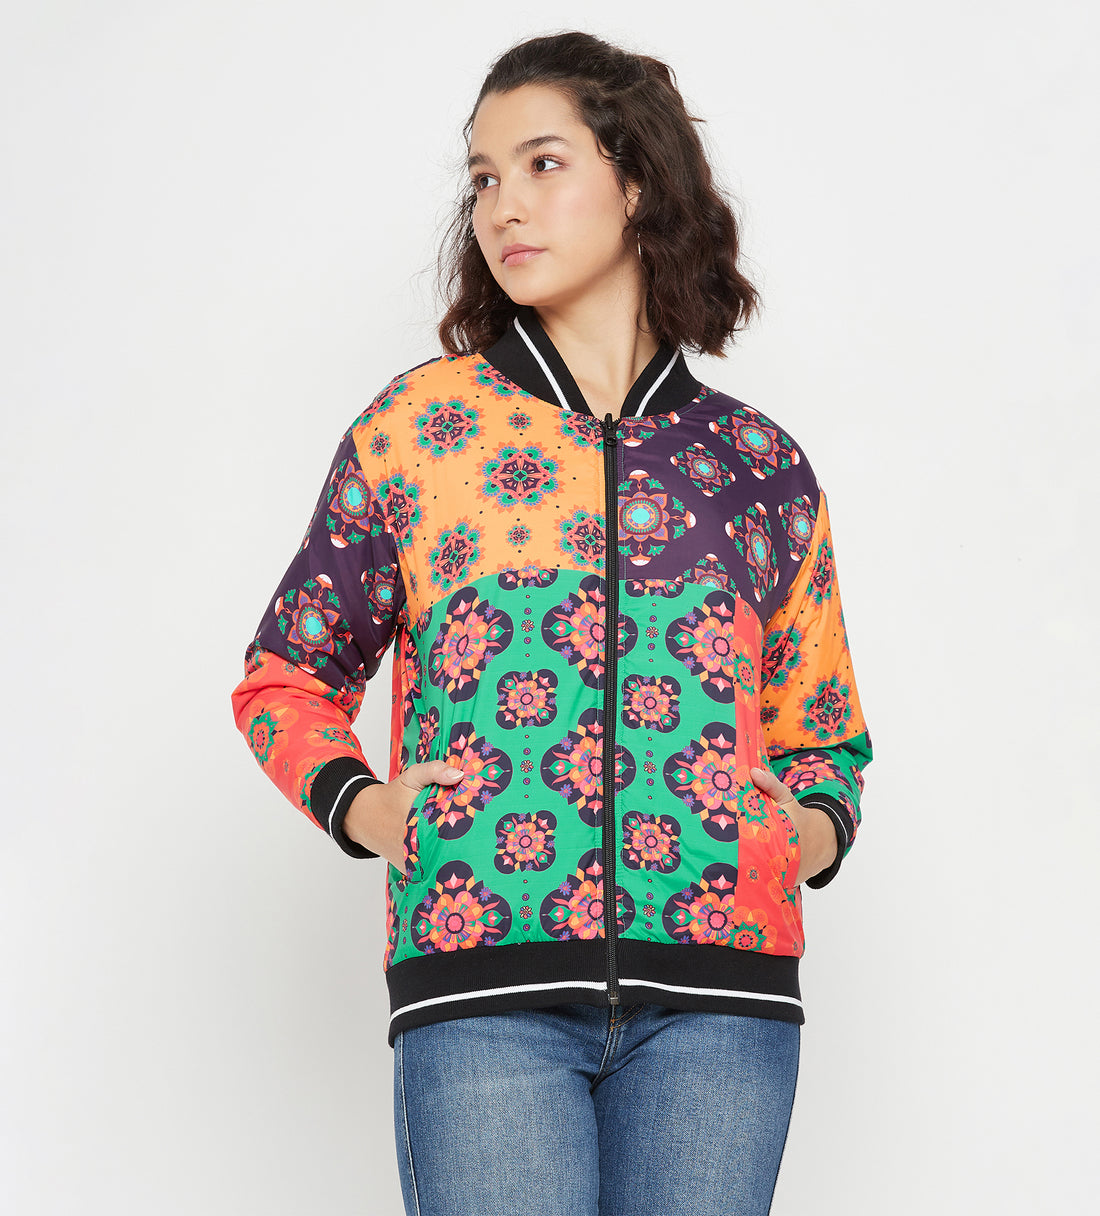 Multicolor Printed Reversible Jacket for Women - EDRIO